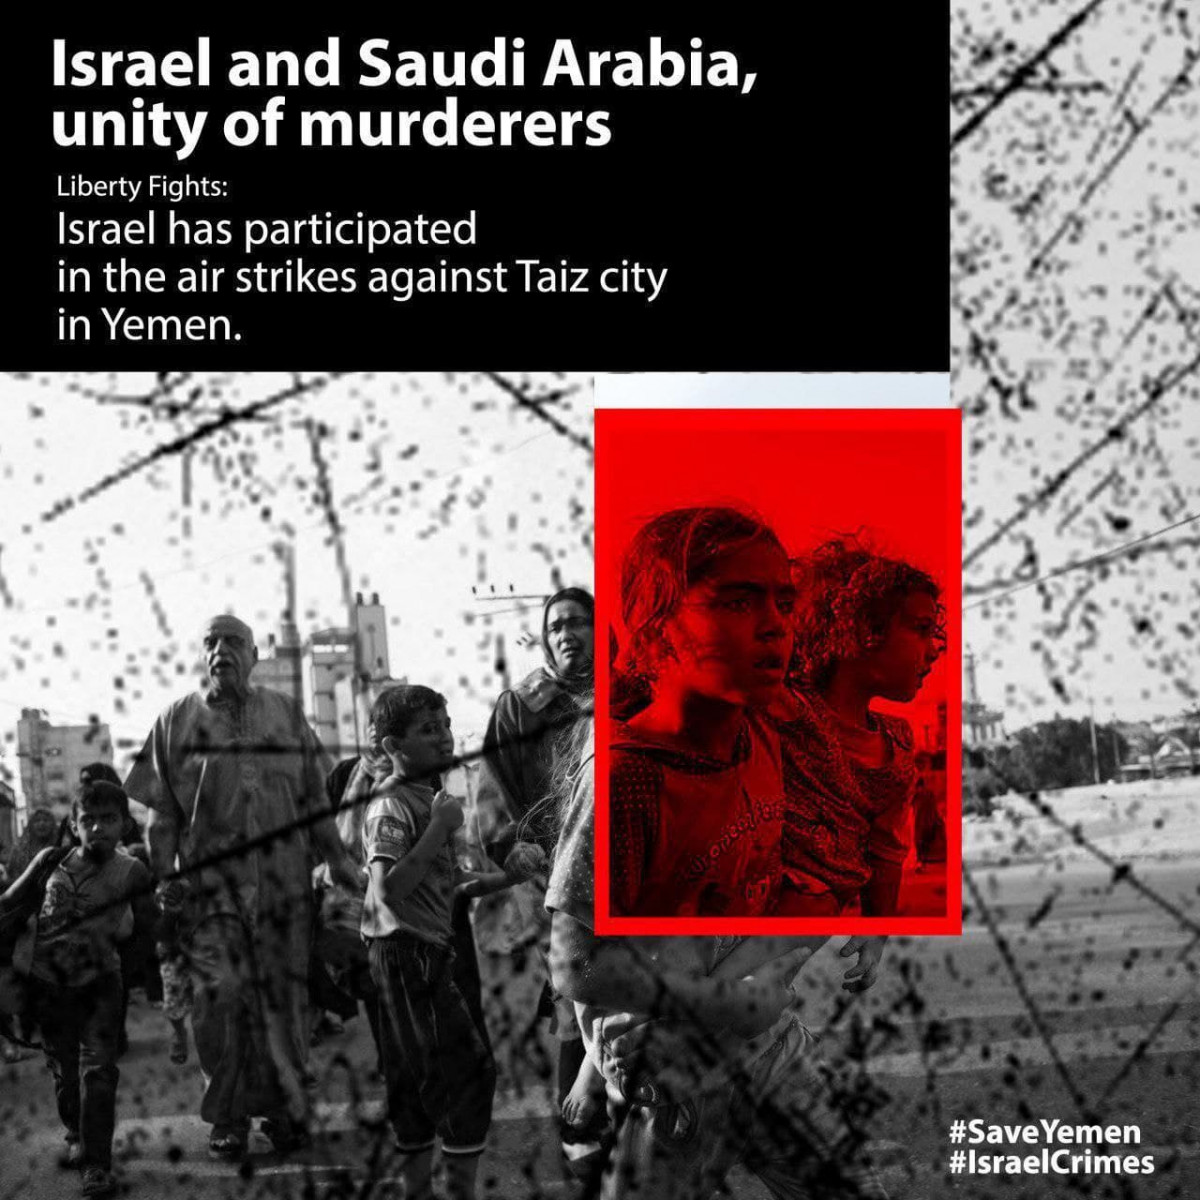 israel and saudiArabia unity of murderers